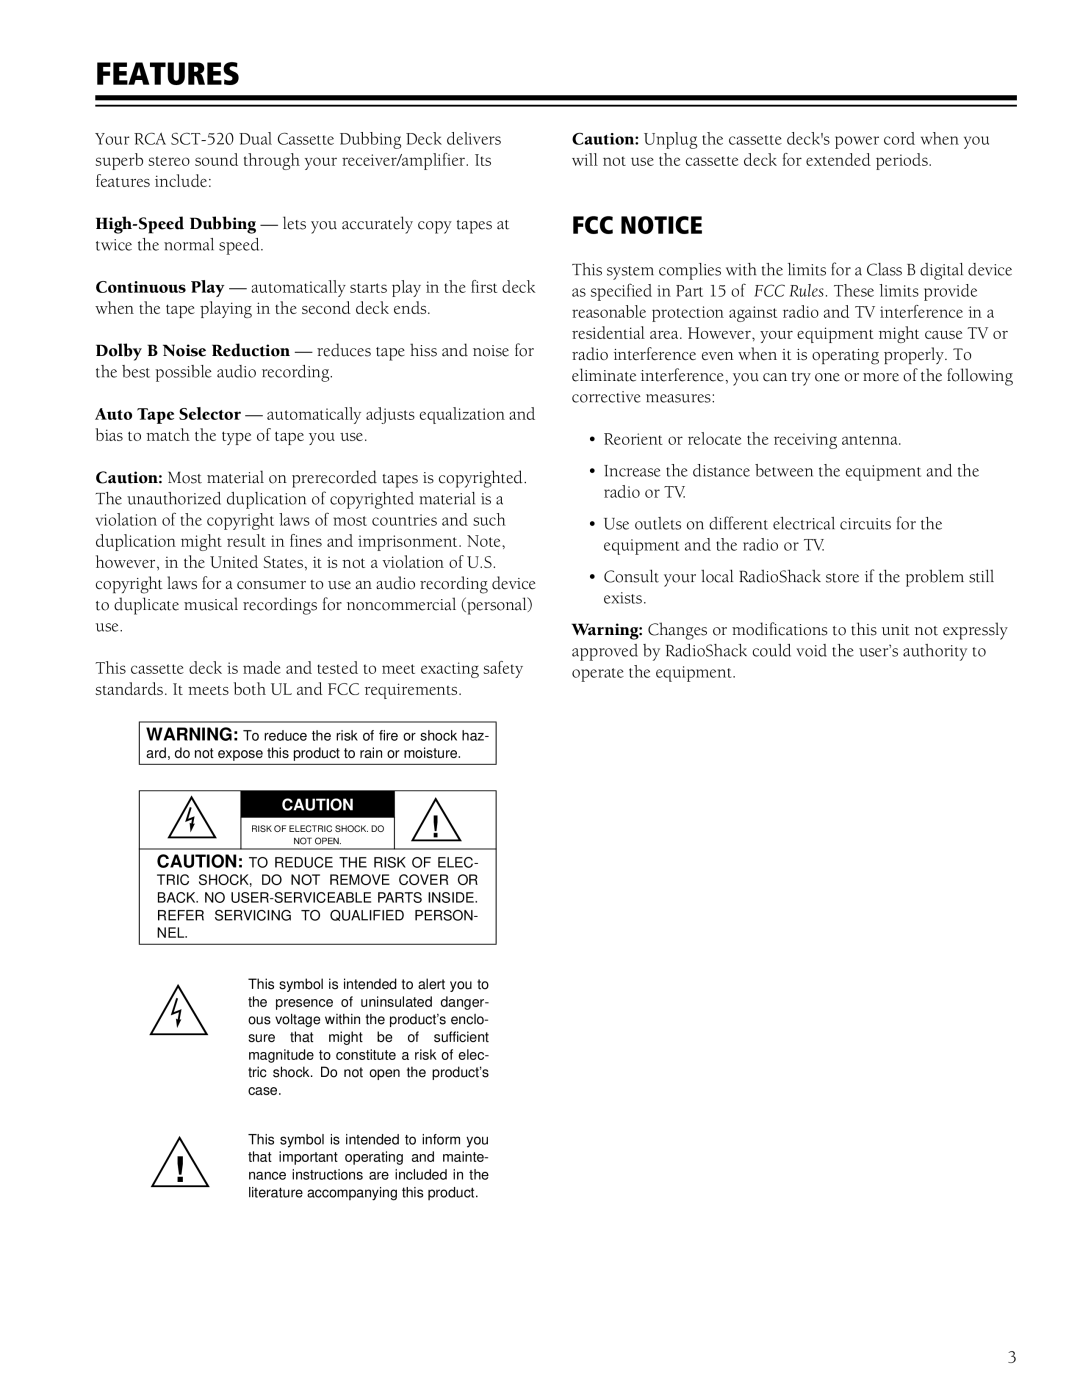 RCA SCT-520 manual Features, Fcc Notice 